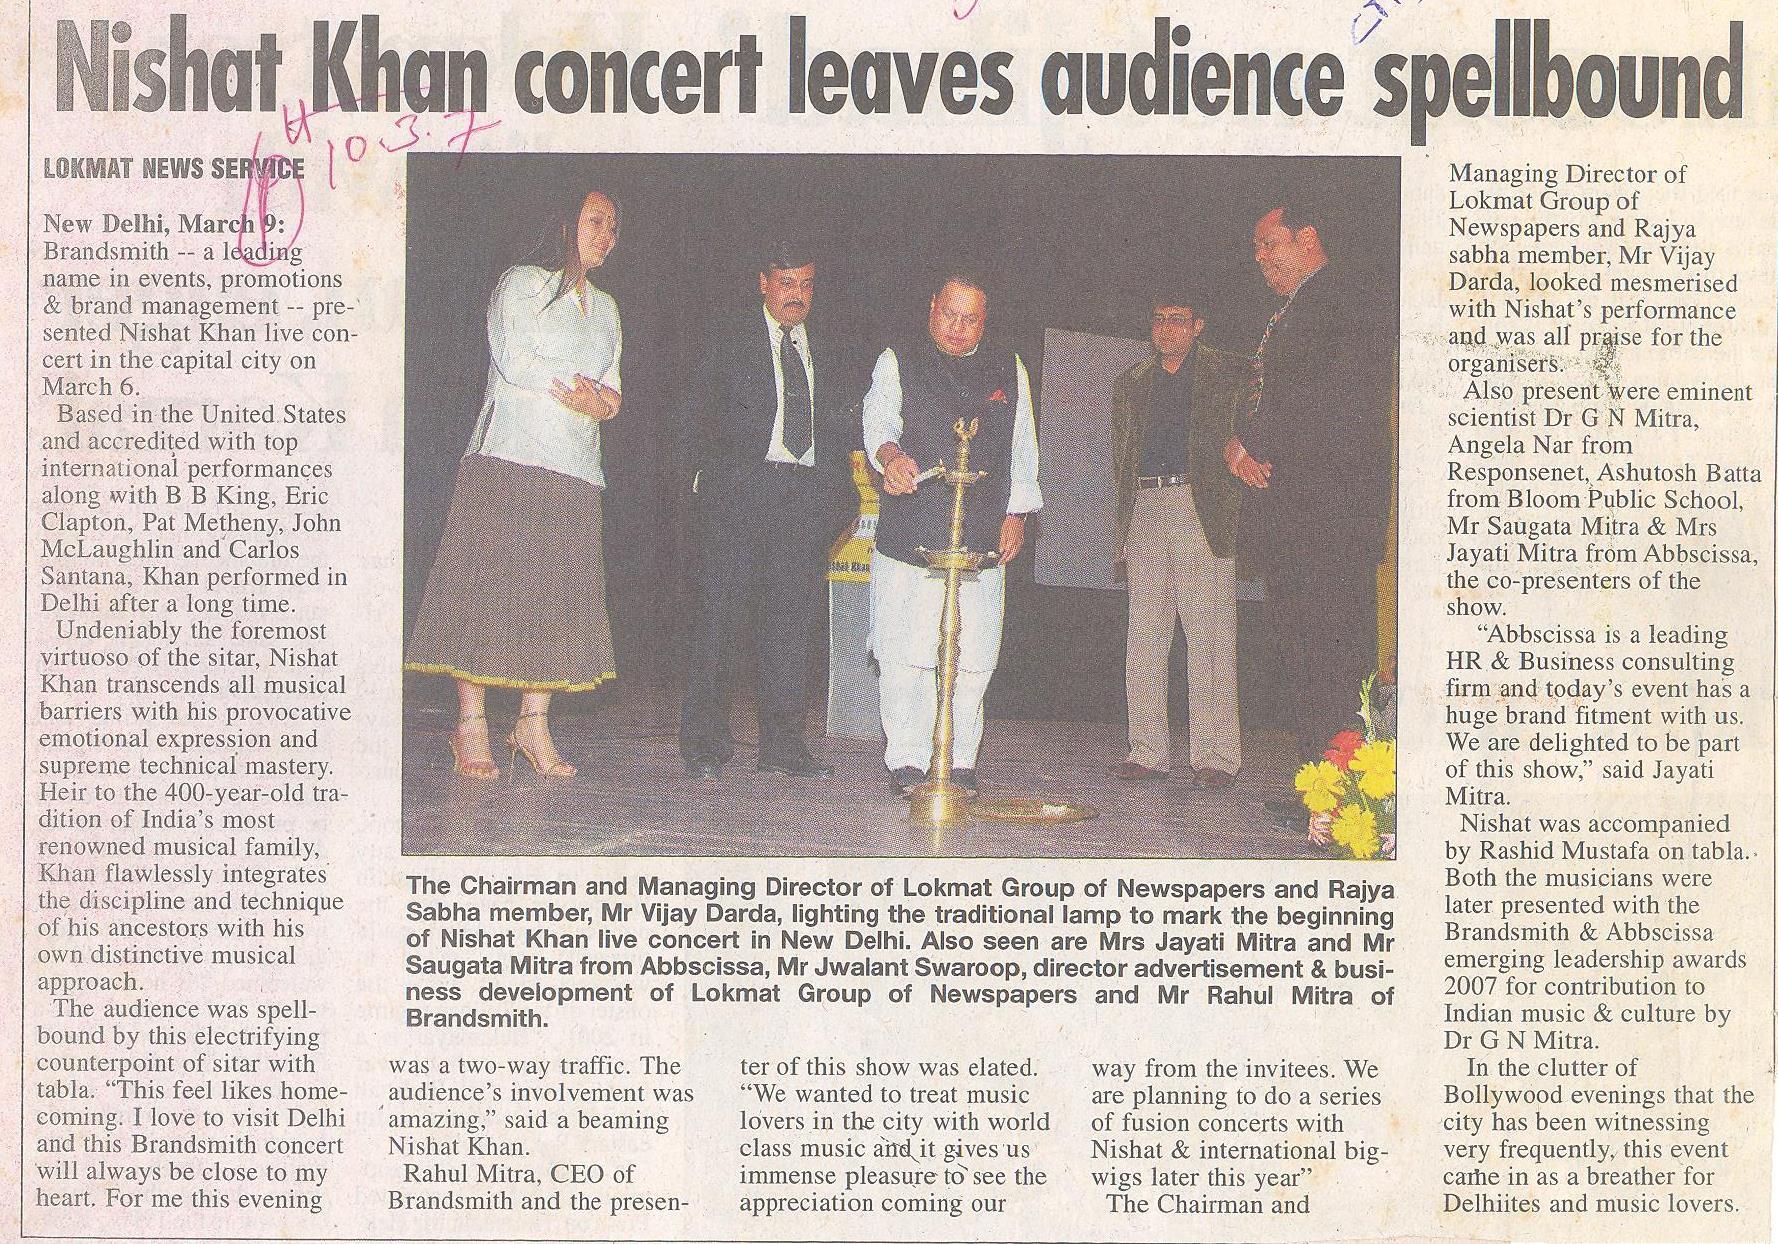 Nishant Khan concert leaves audience spellbound